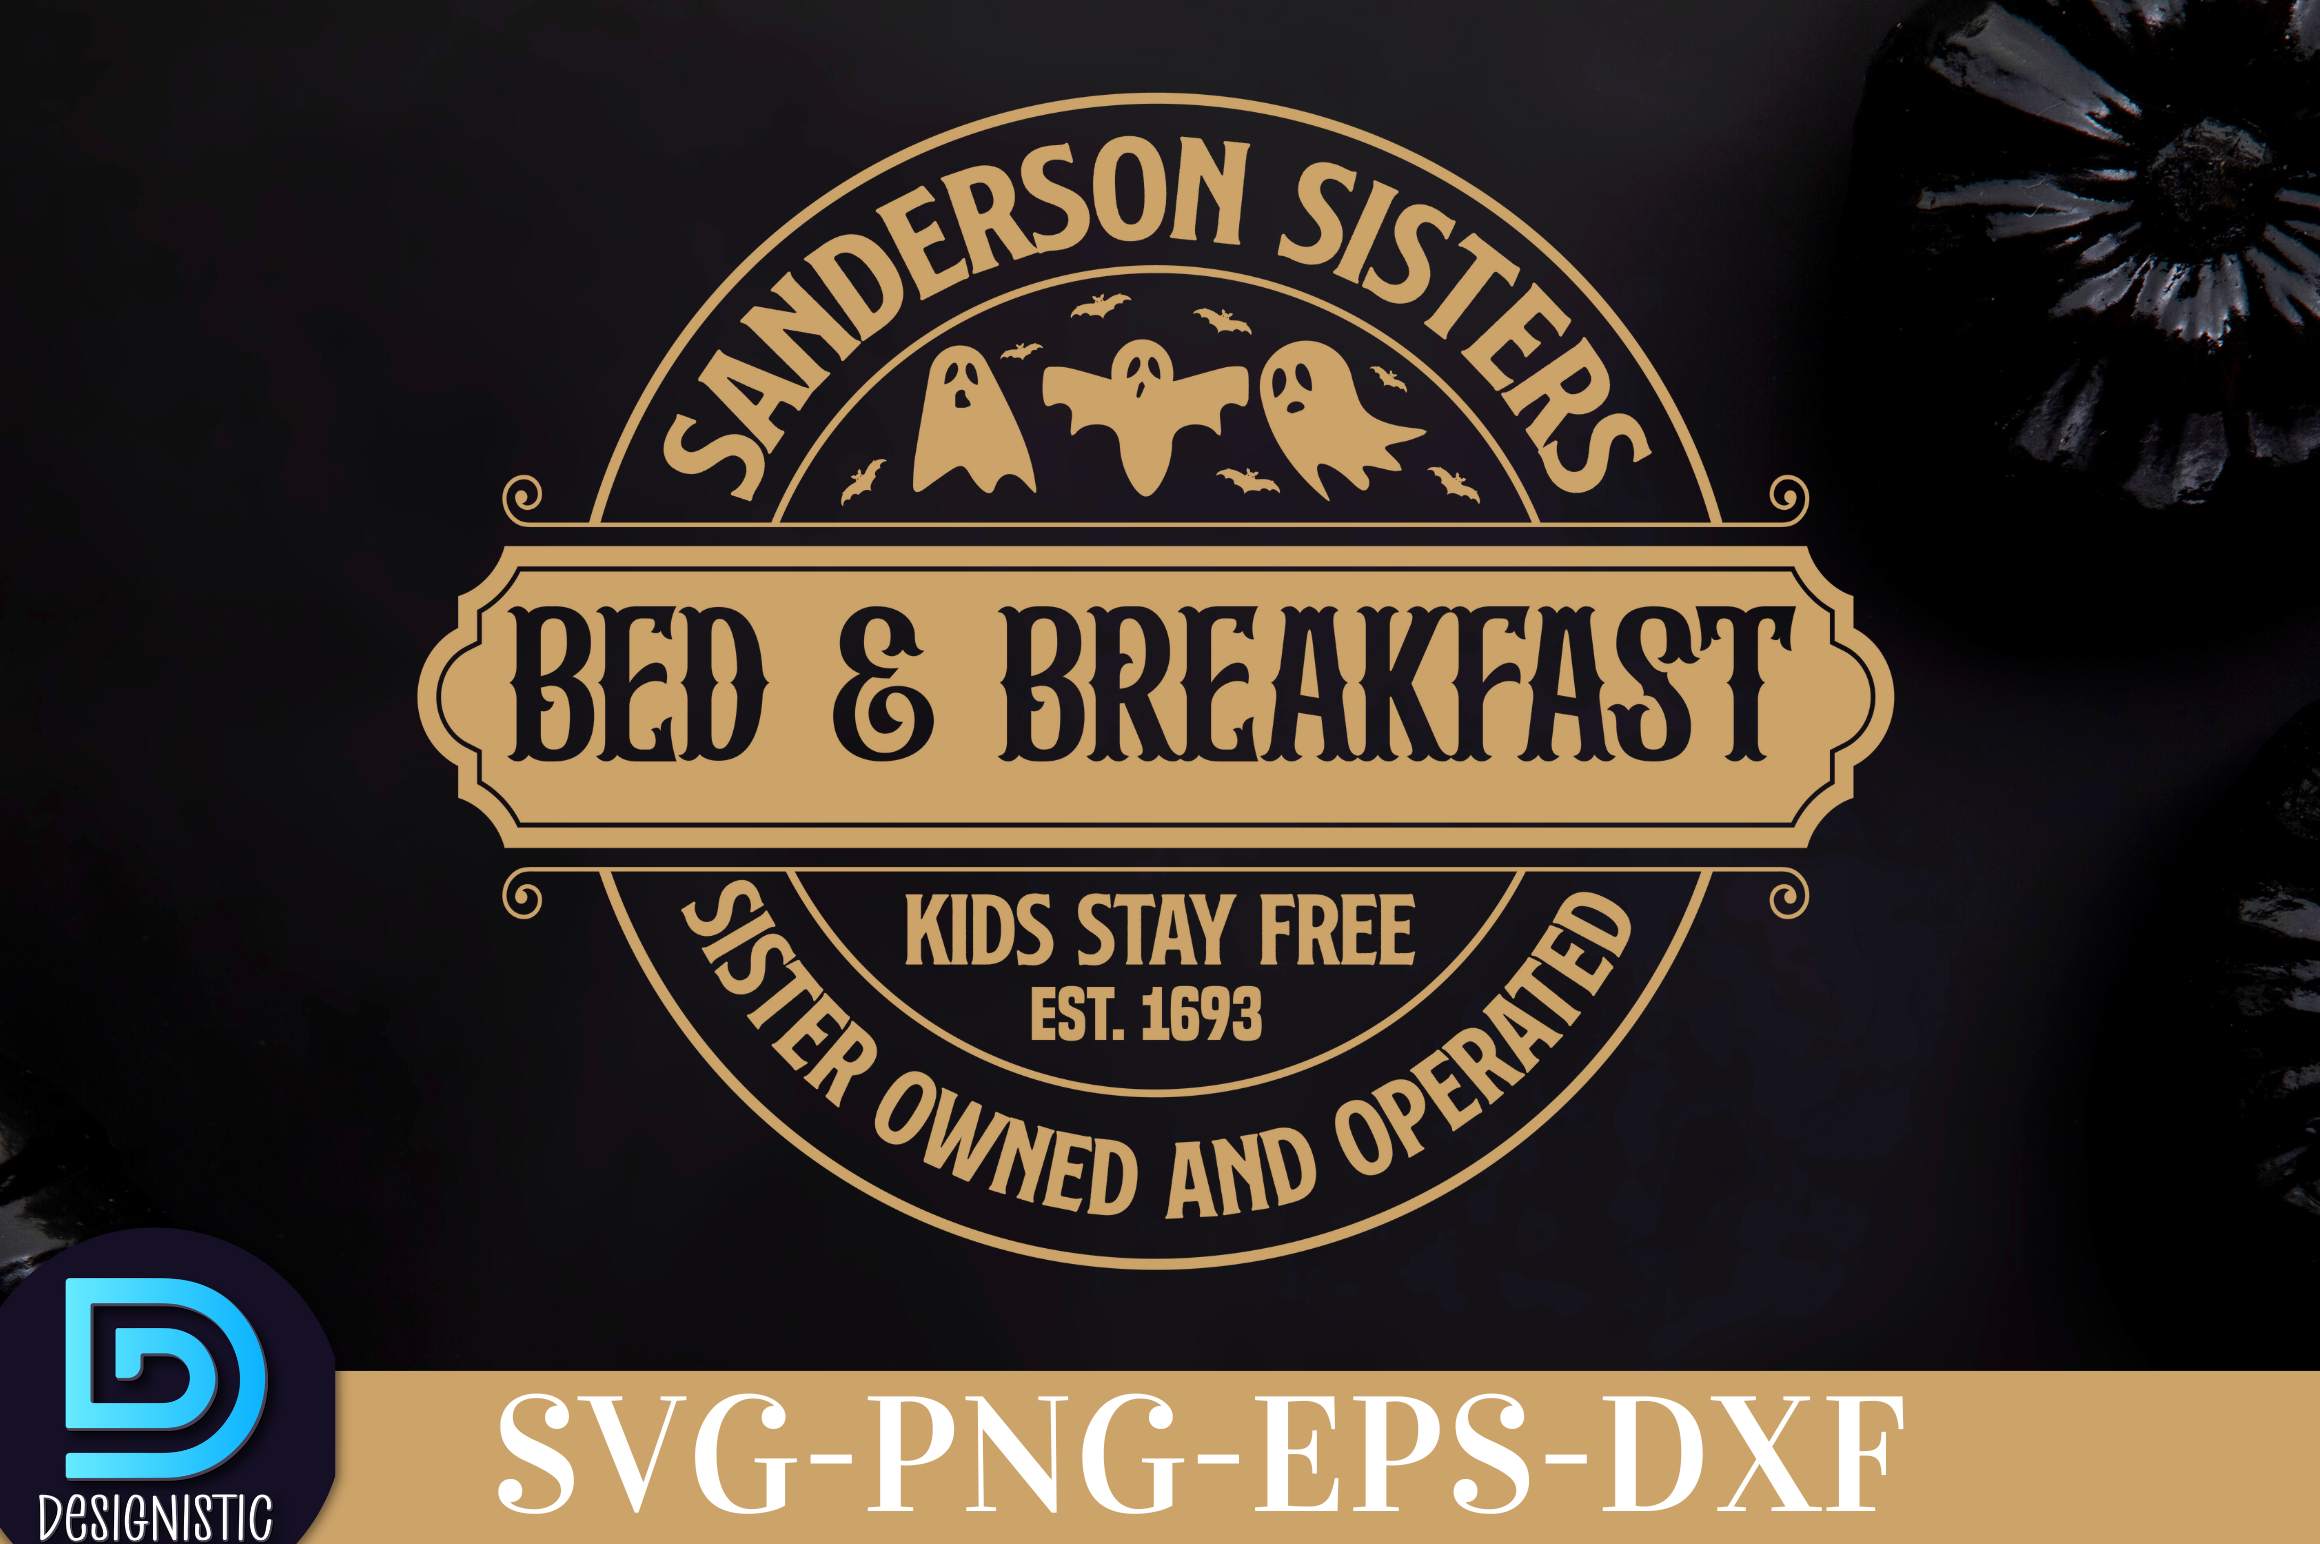 Sanderson sisters bed & breakfast kids stay free est. 1693 sister owne